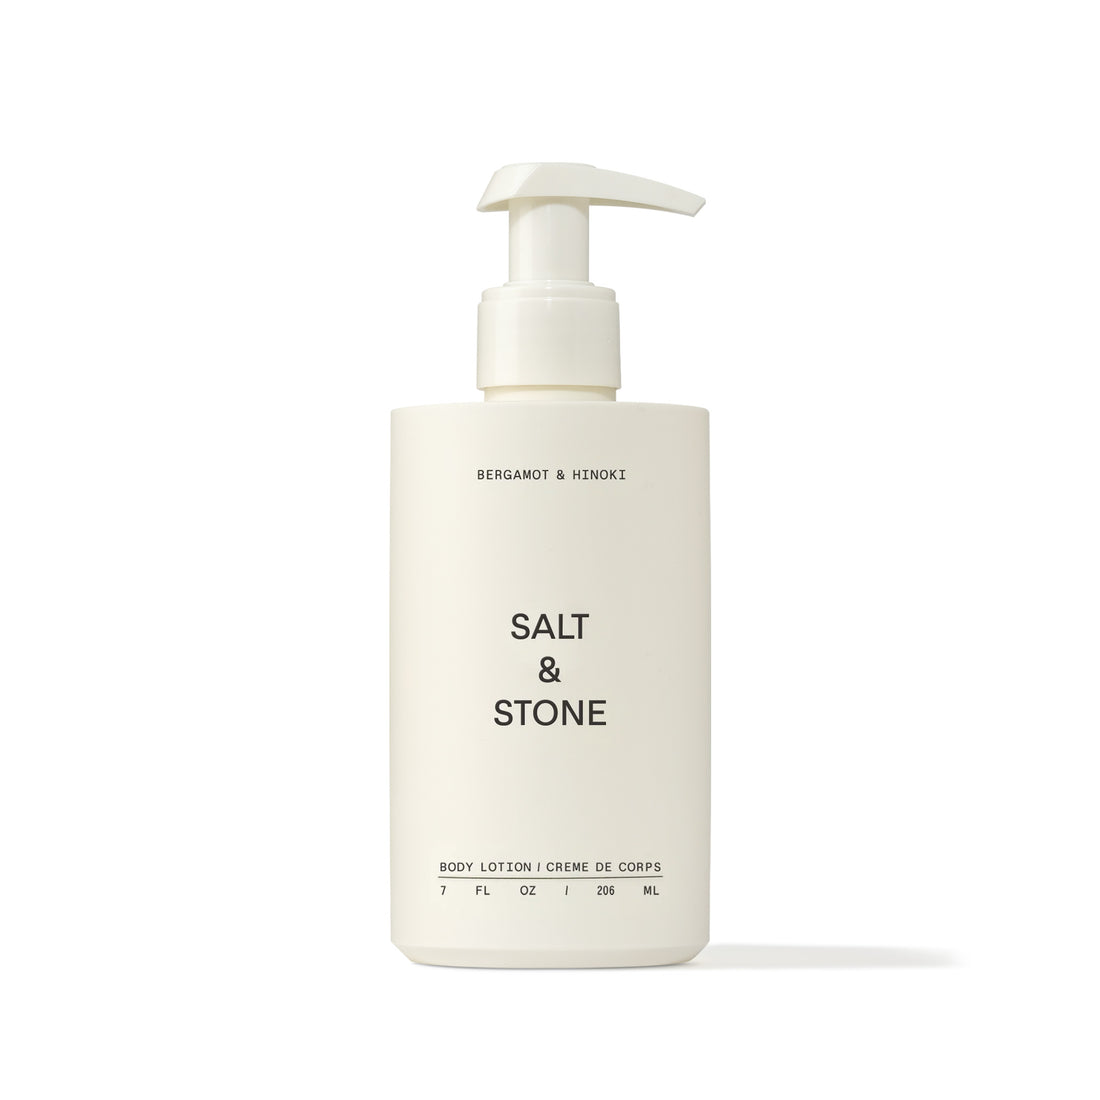 Salt & Stone Bergamot & Hinoki Body Lotion 206 ml